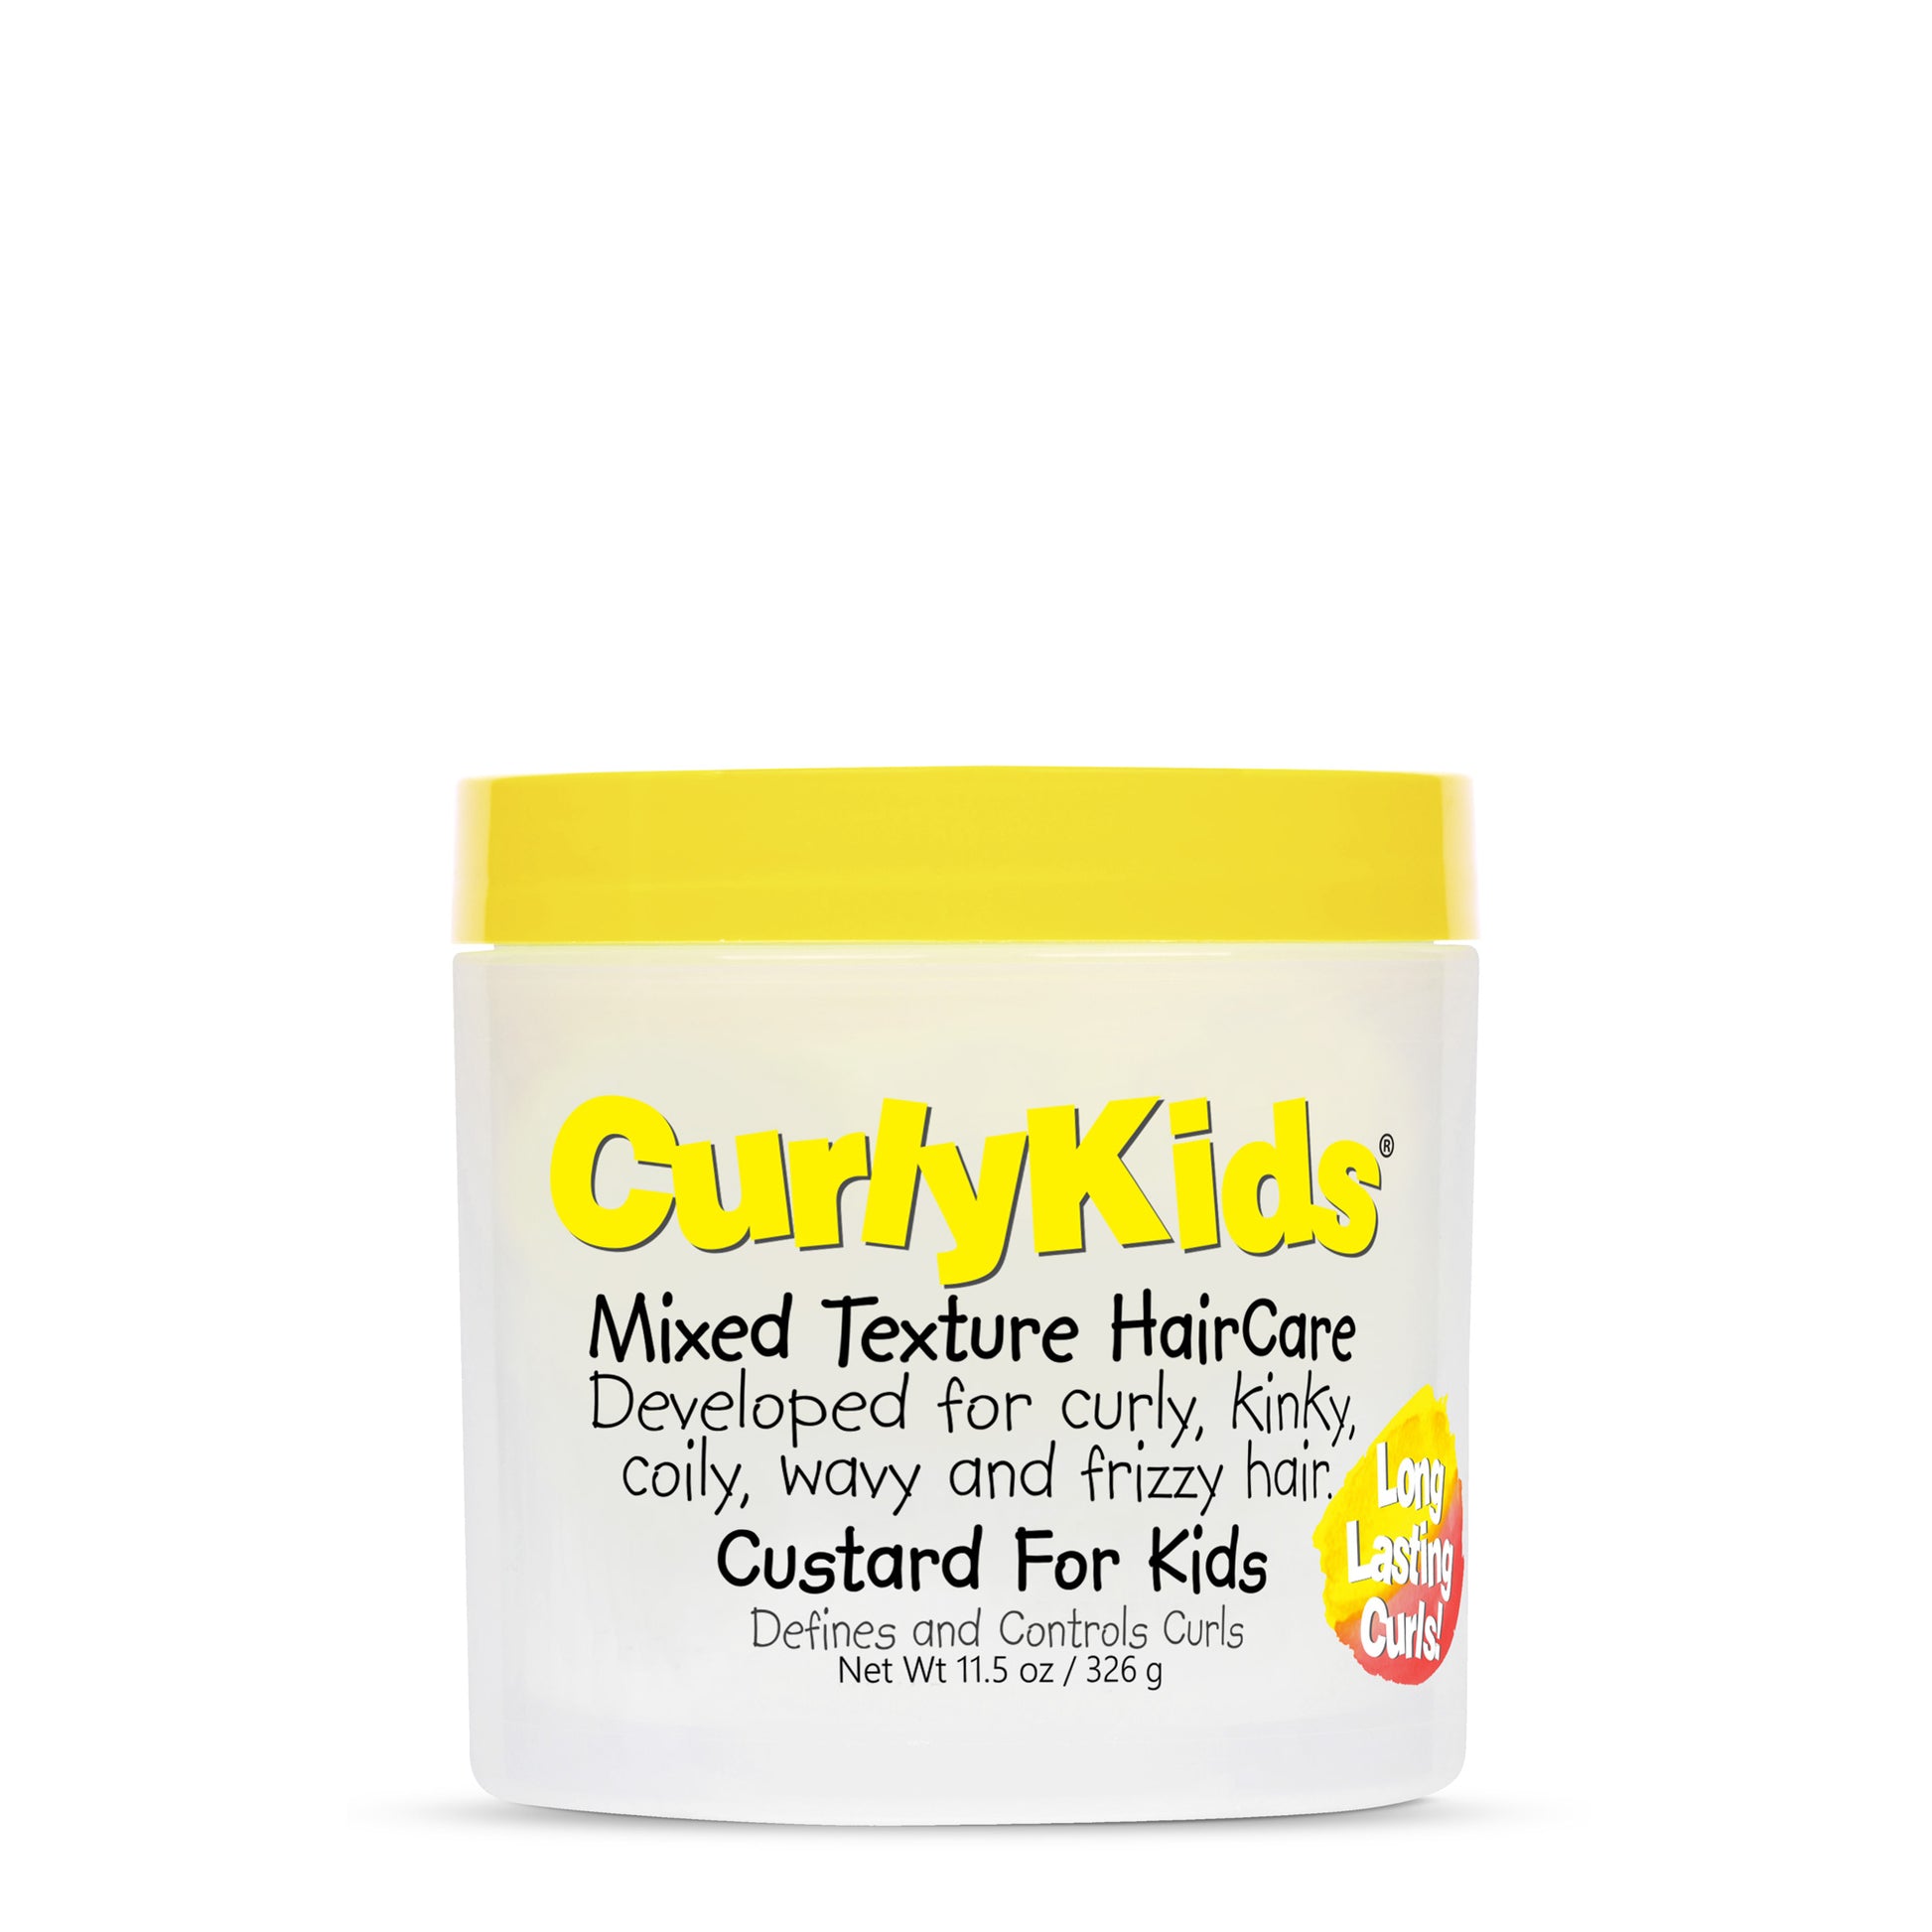 CurlyKids - Custard For Kids (Family Size)